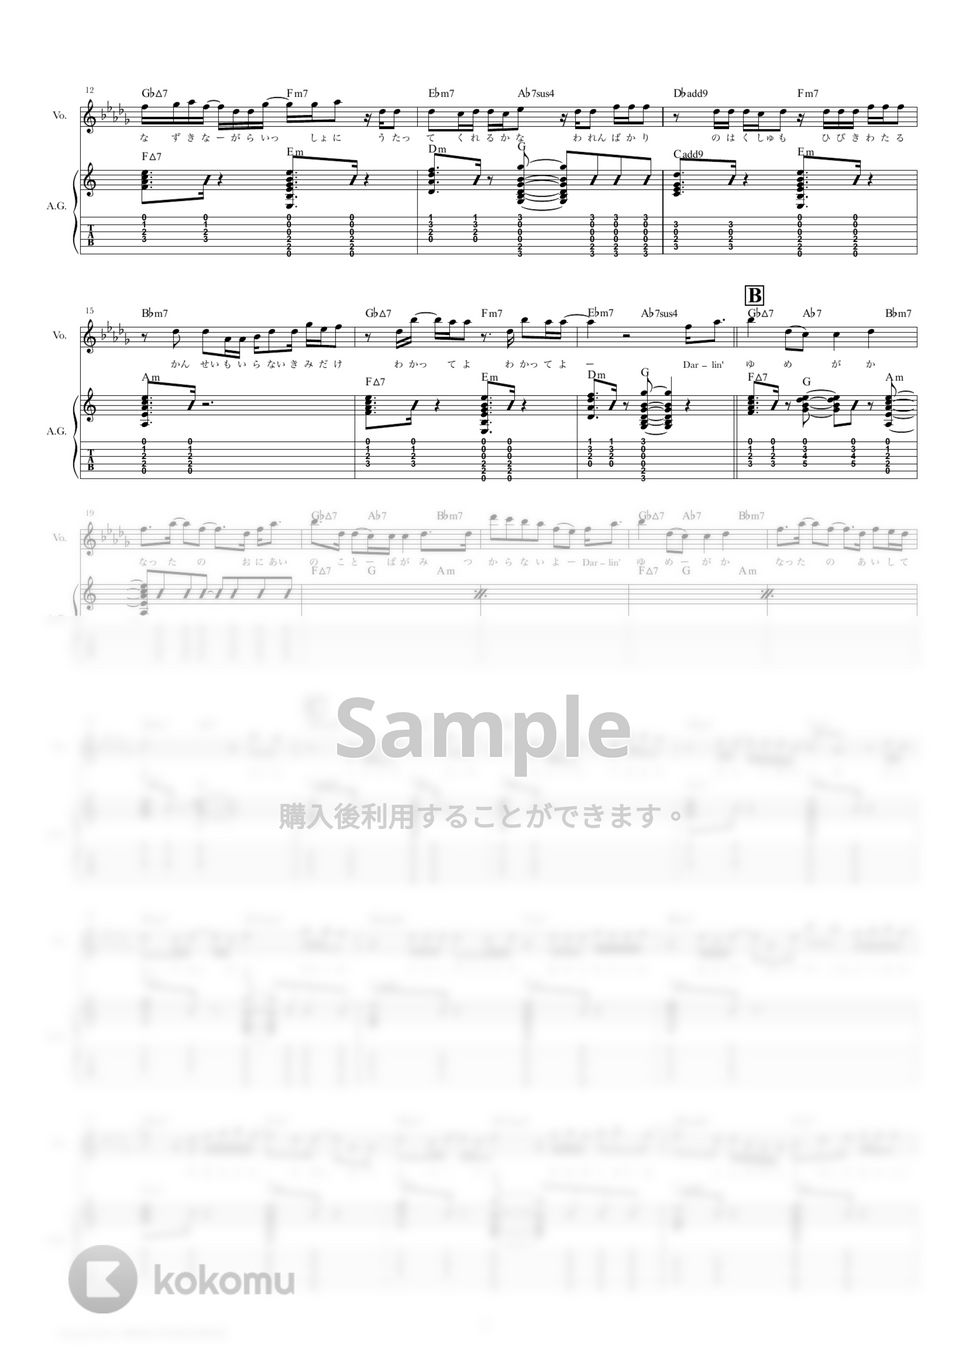 Aimer - カタオモイ (弾き語りアレンジ・歌詞・コード付き) by TRIAD GUITAR SCHOOL